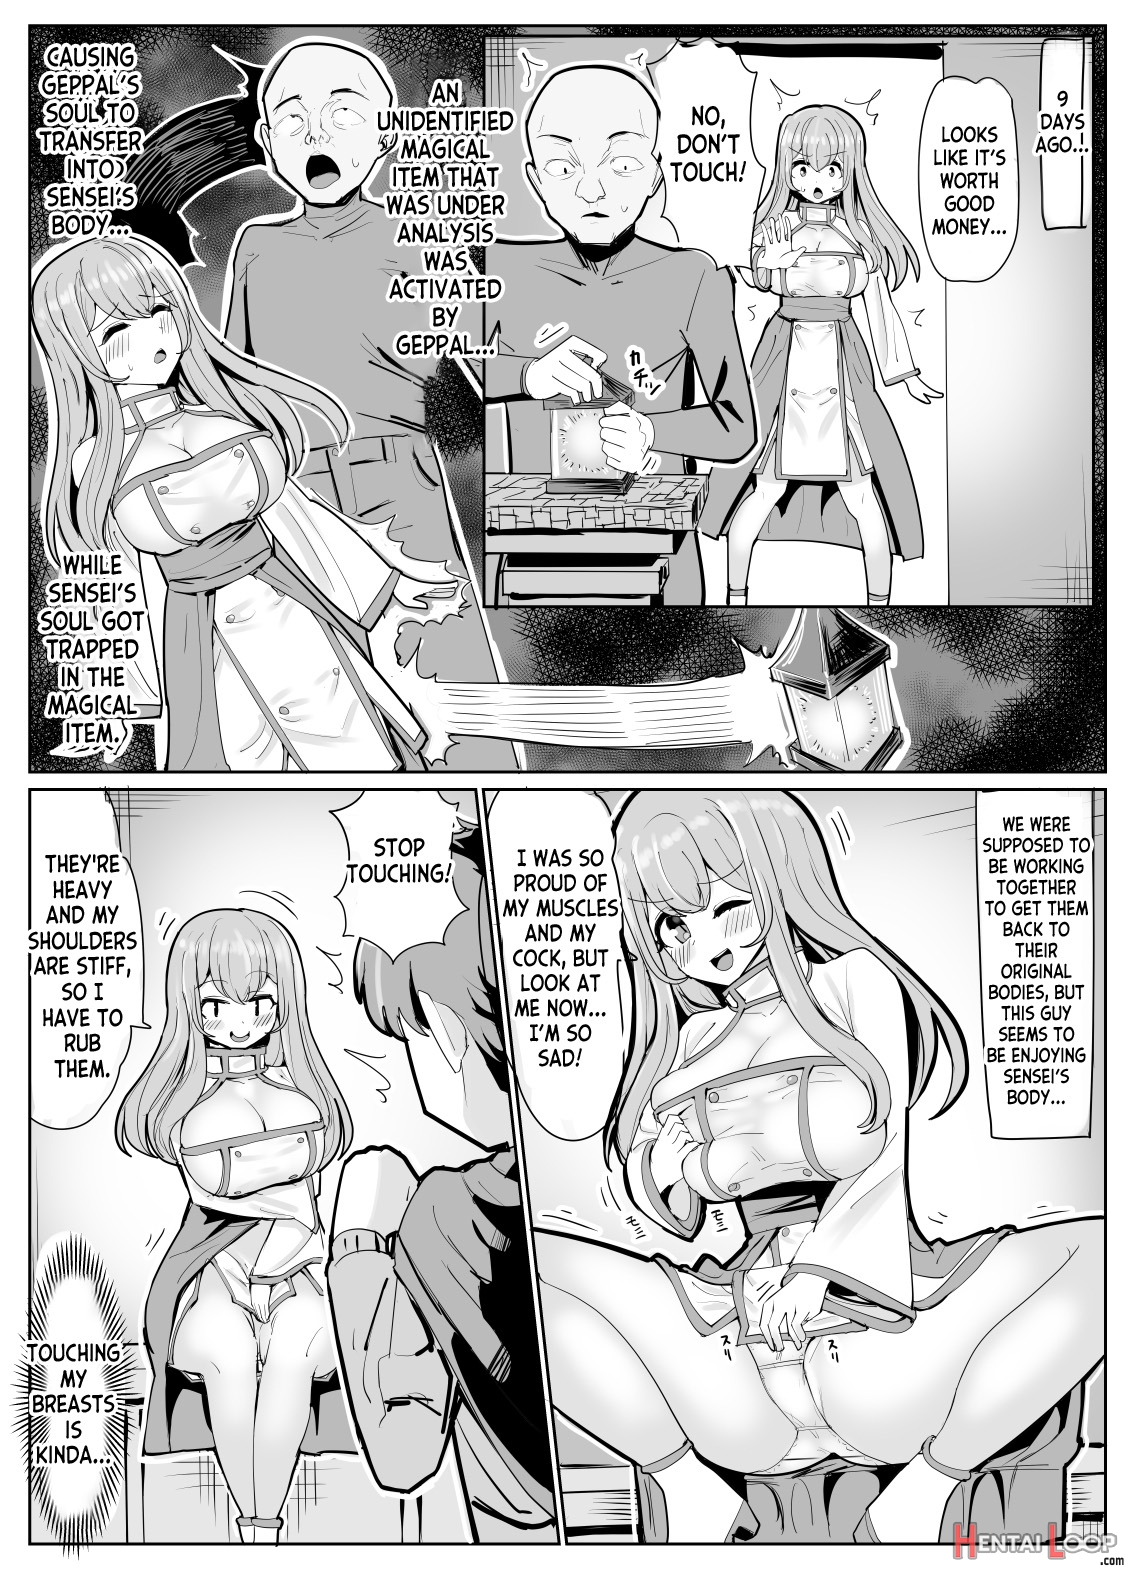 Mage Teacher Possession Manga page 4